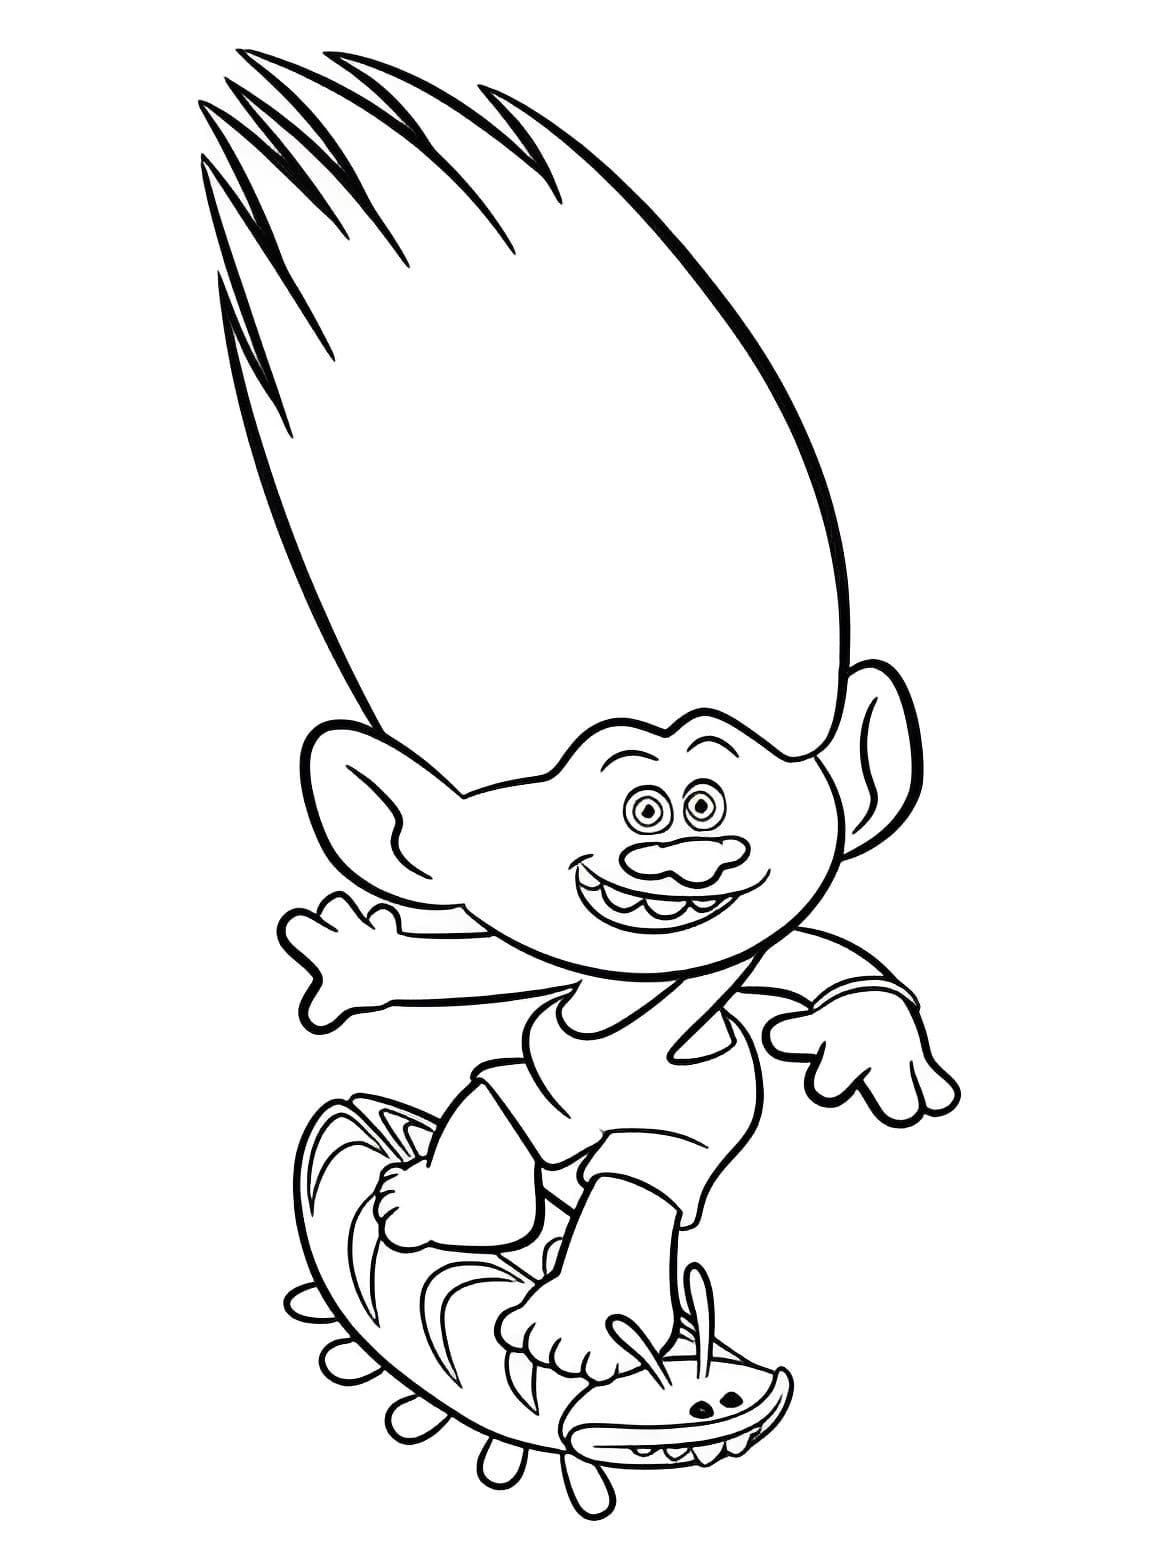 Aspen Heitz de Les Trolls coloring page